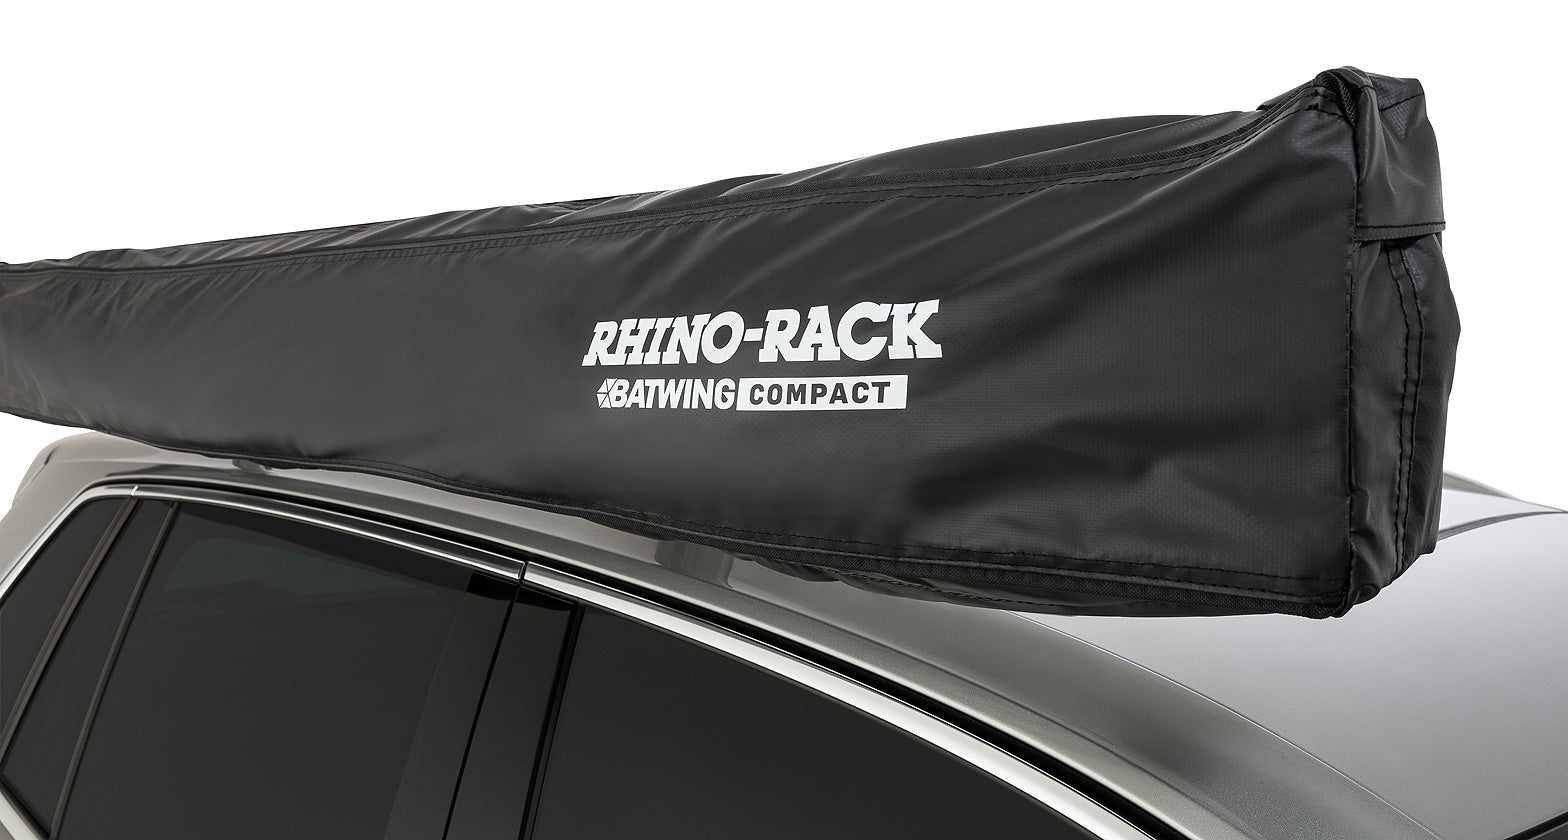 Right Side Mounted Rhino-Rack Batwing Compact Awning- black PVC storage bag